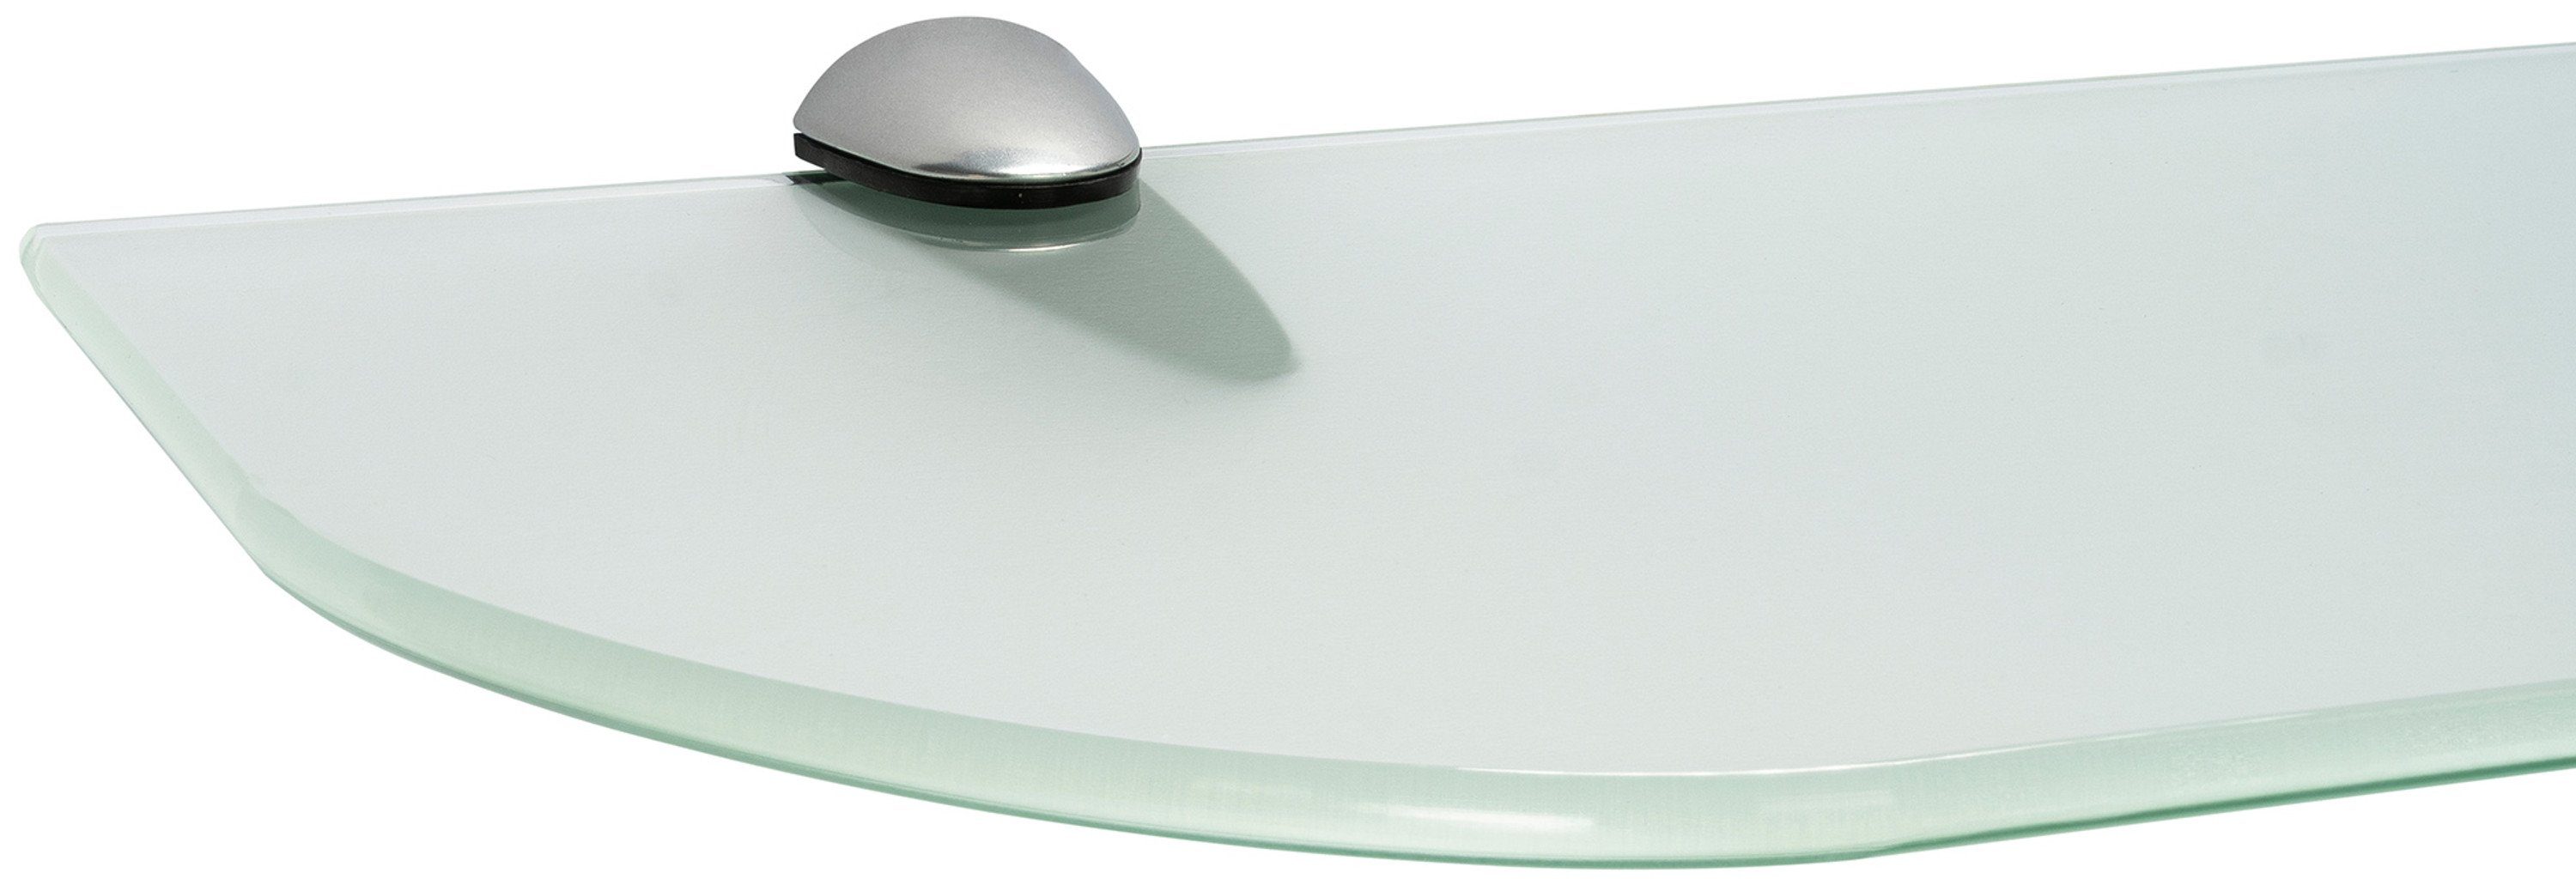 ESG-Sicherheitsglas CLASSICO ib 15 Glasboden Wandregal cm + Clip Wandregal 6mm style aus x Silbermatt, Glasregal satiniert - 90